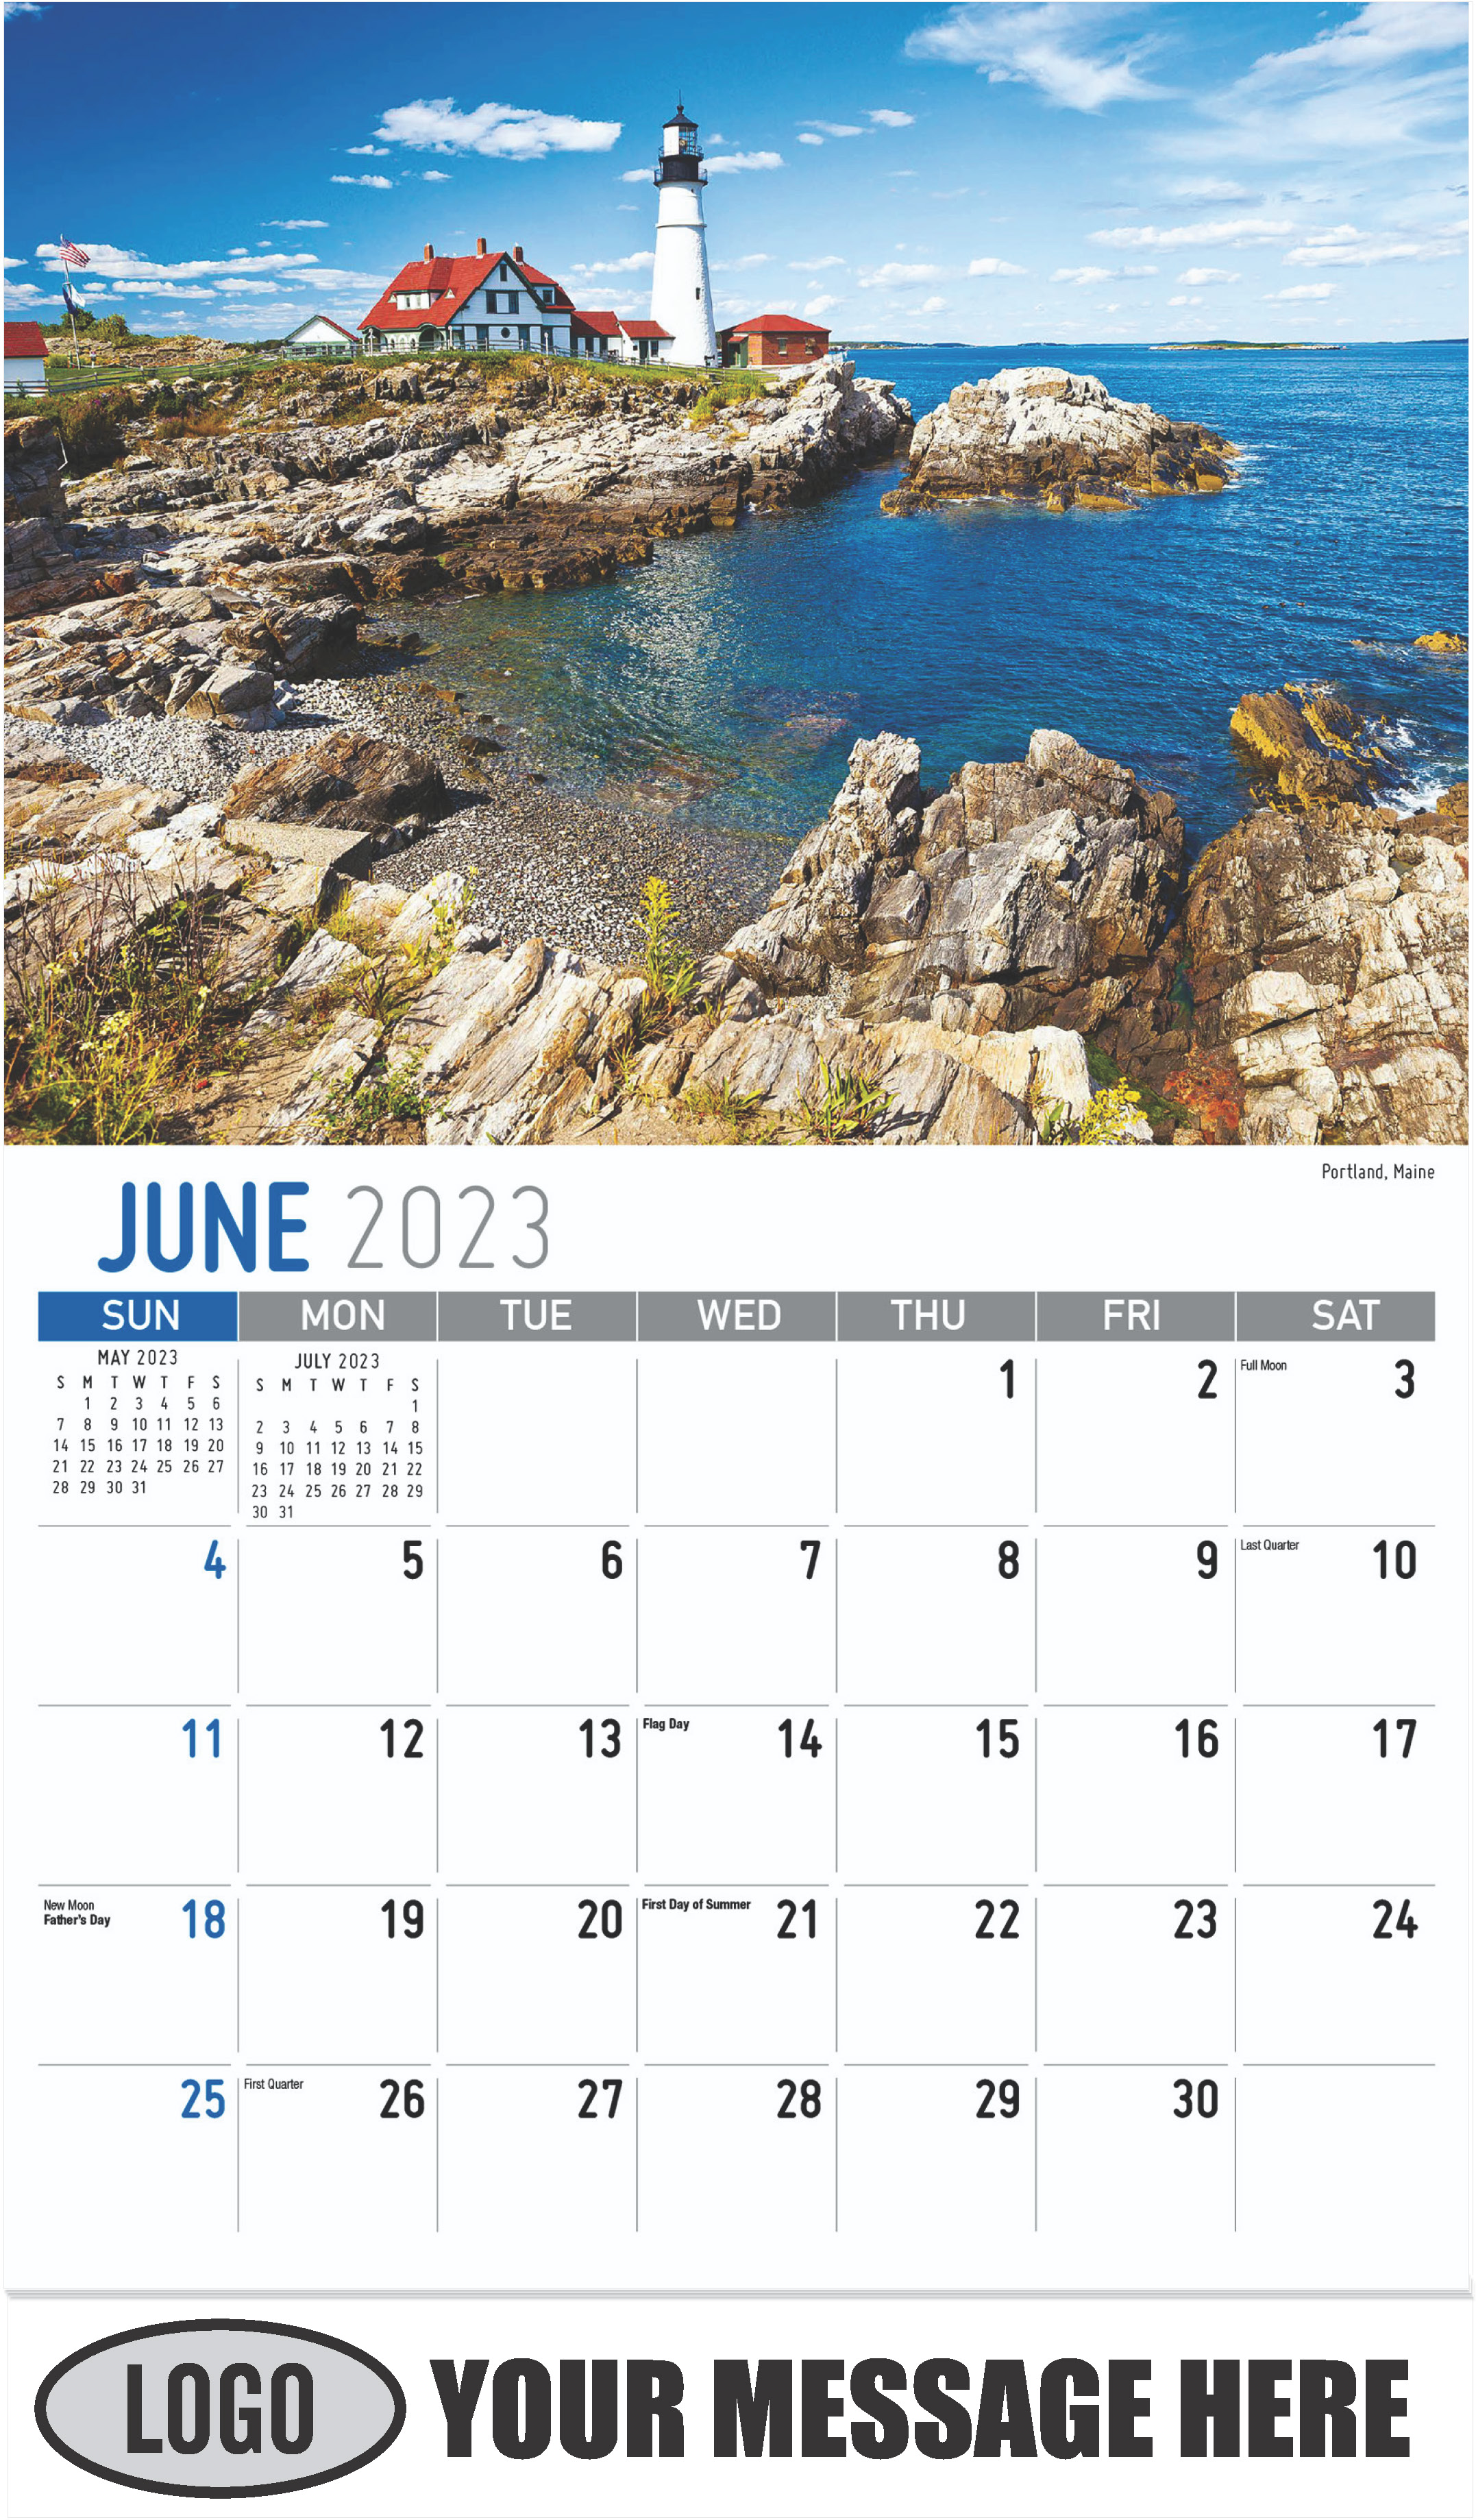 Portland, Maine - June - Scenes of New England 2023 Promotional Calendar